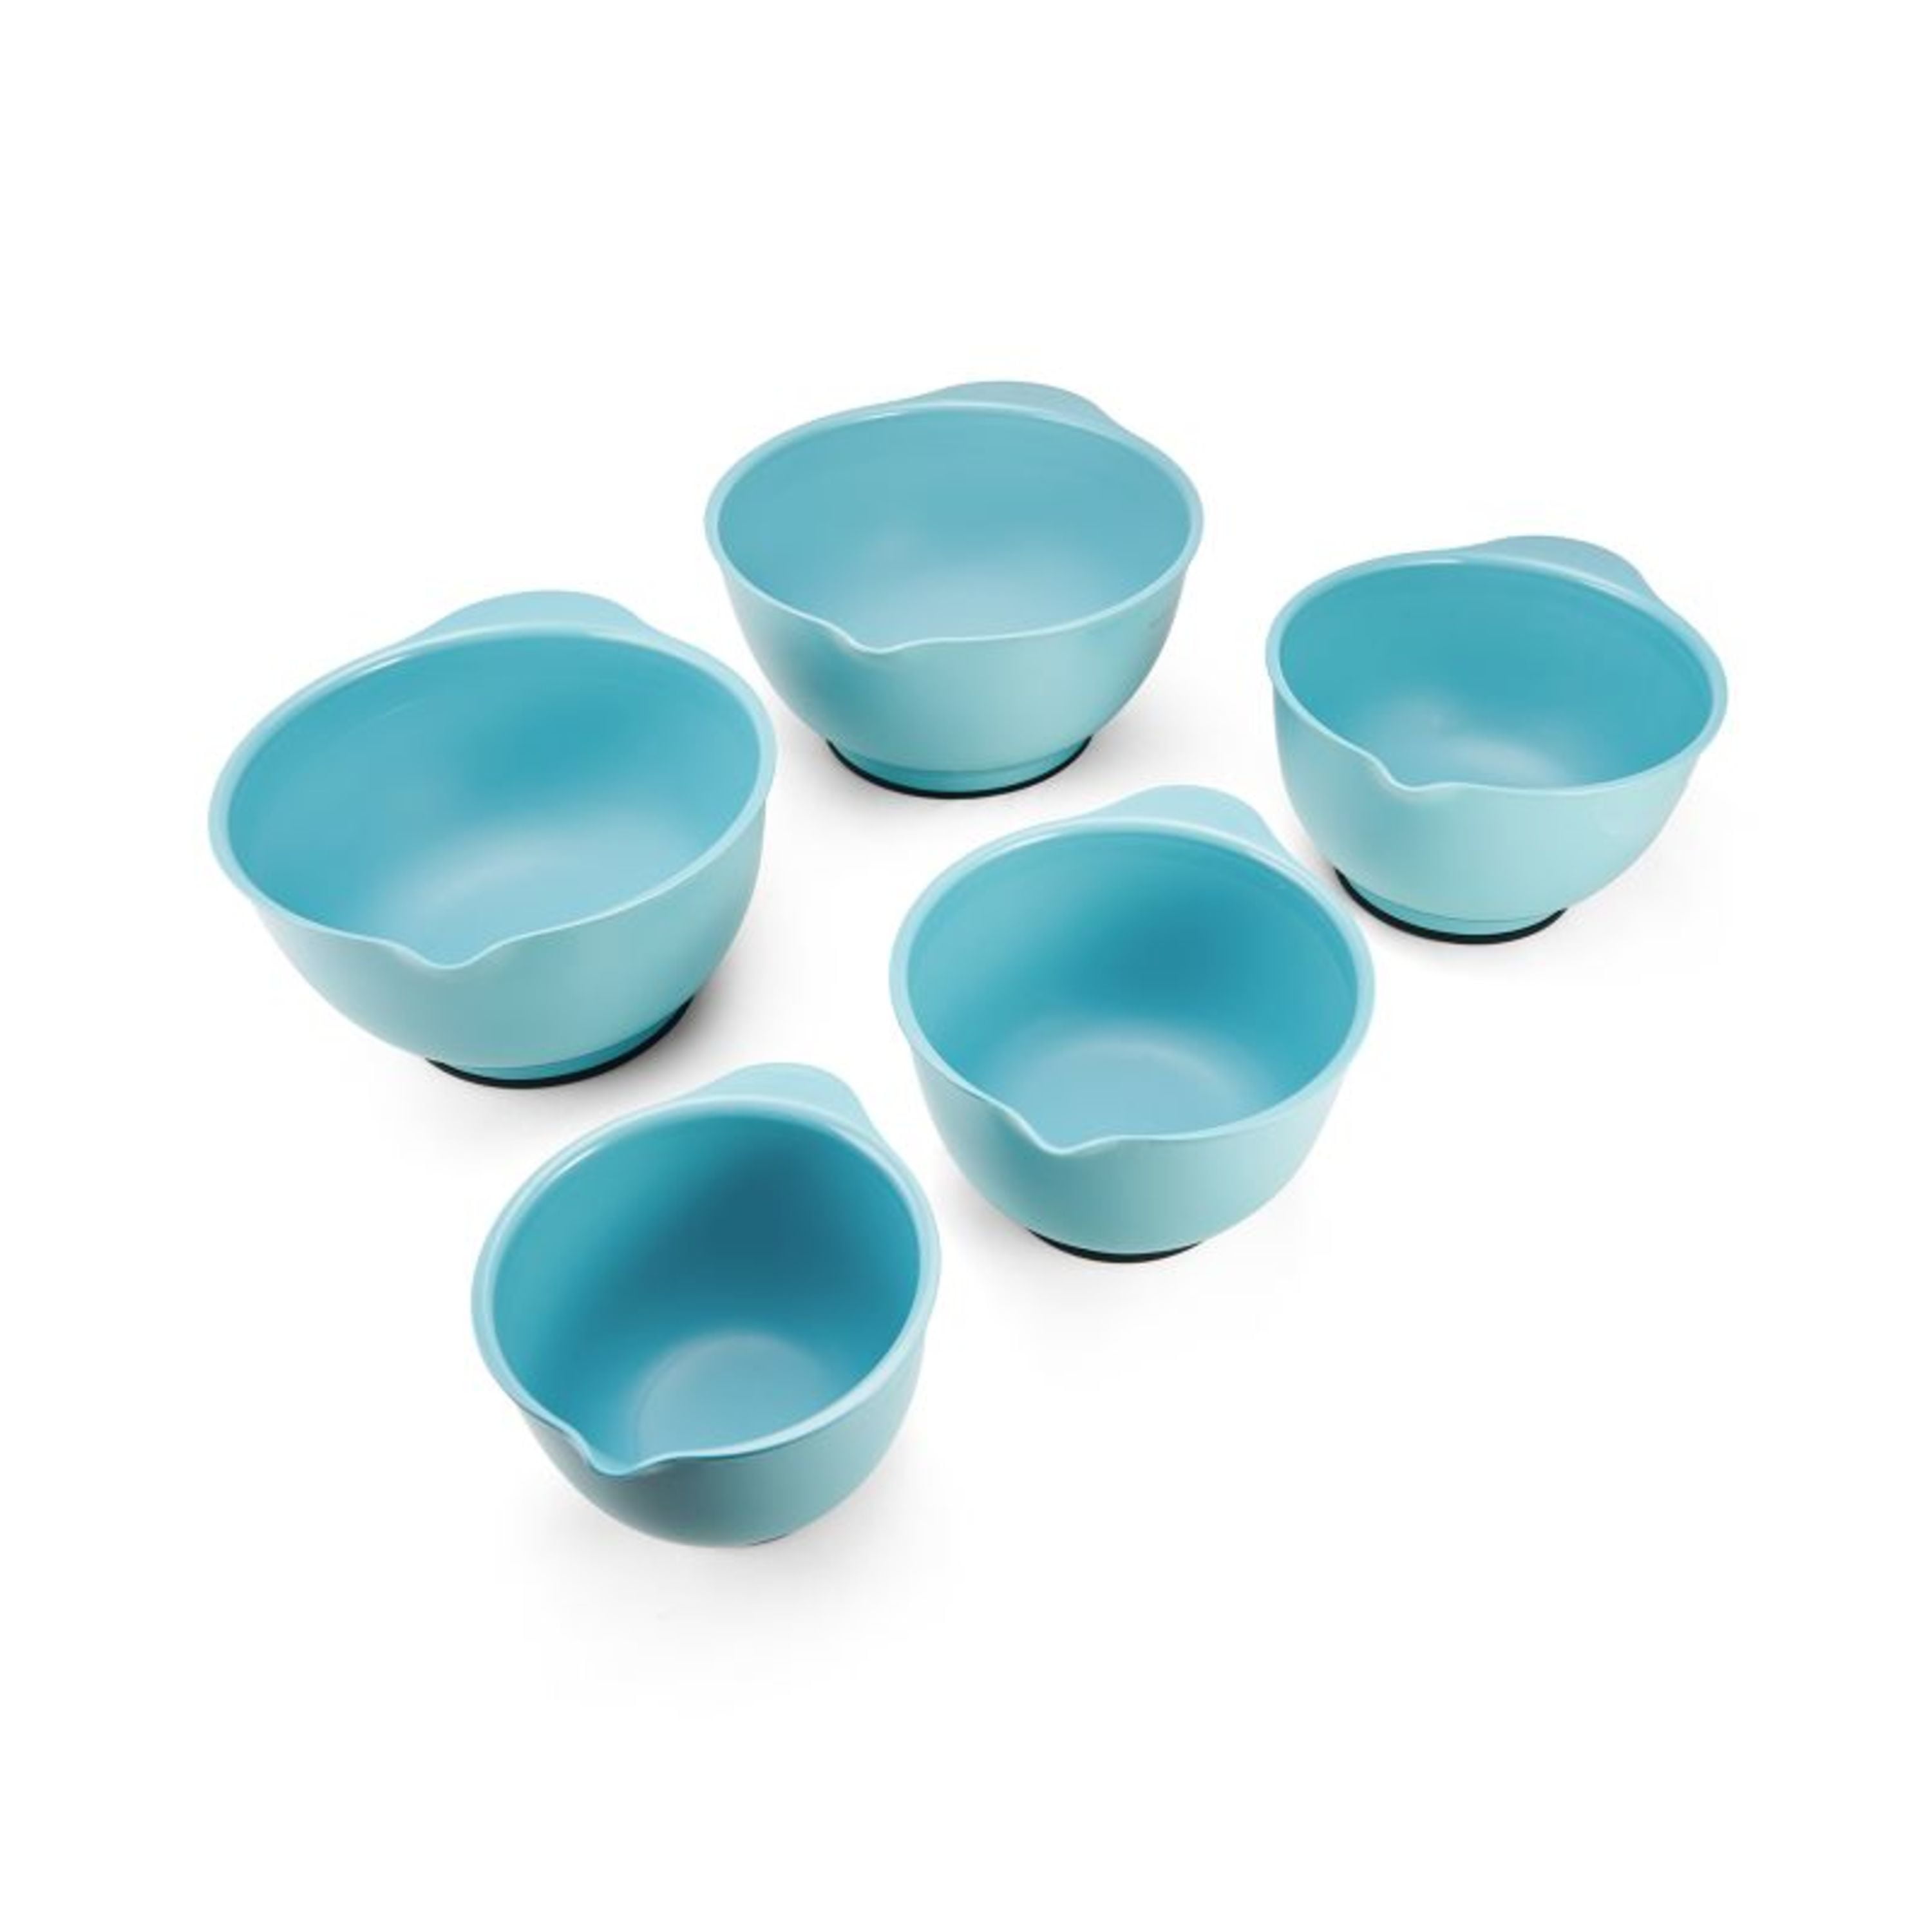 Amscan 10 Quart Plastic Bowls 5 x 14 12 Apple Red Set Of 3 Bowls - Office  Depot